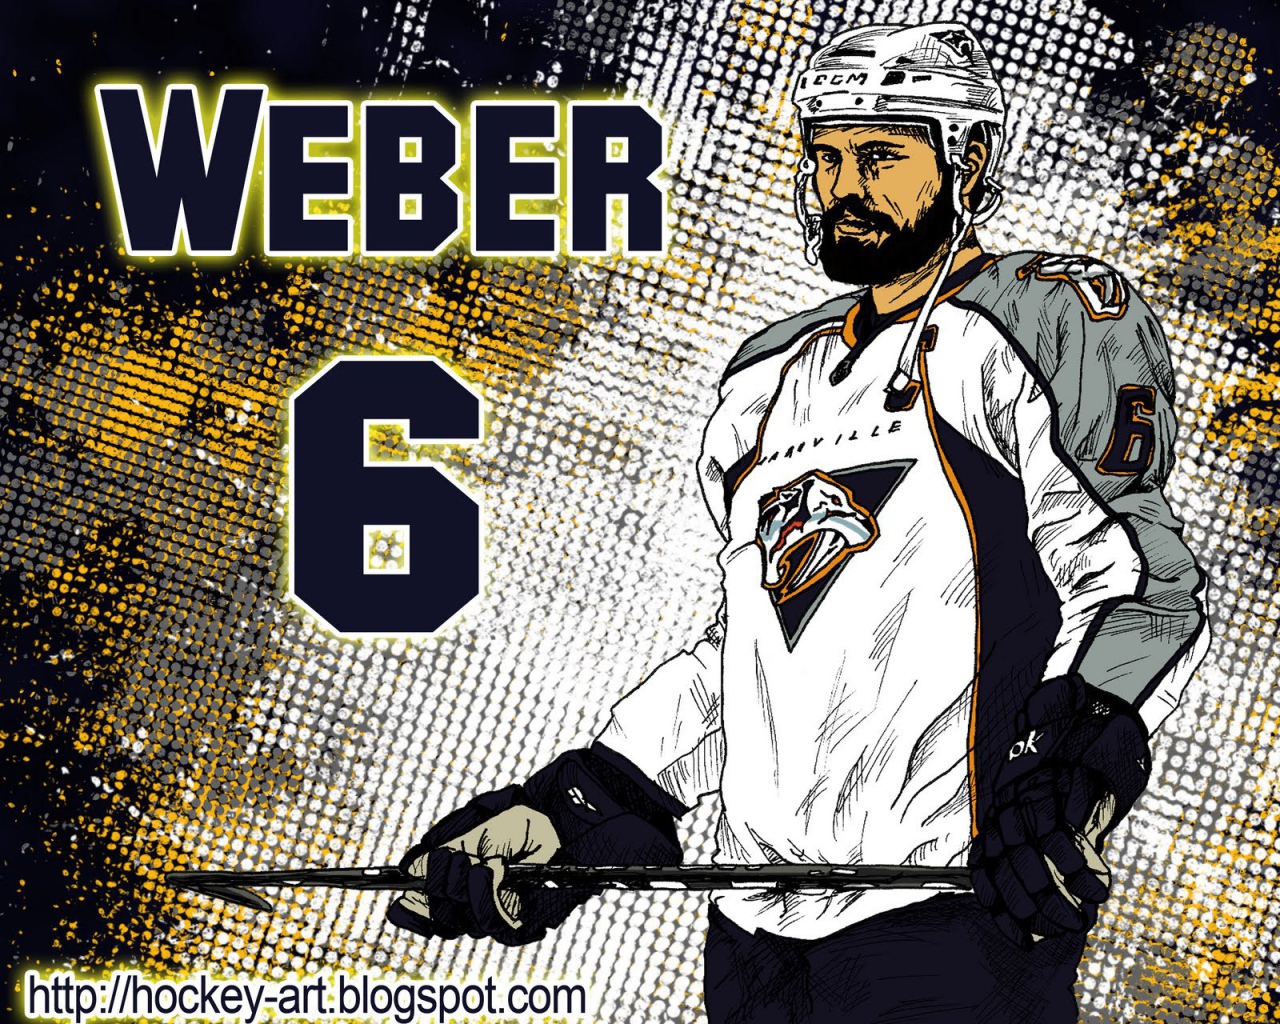 Hockey player SHEA Weber on ice